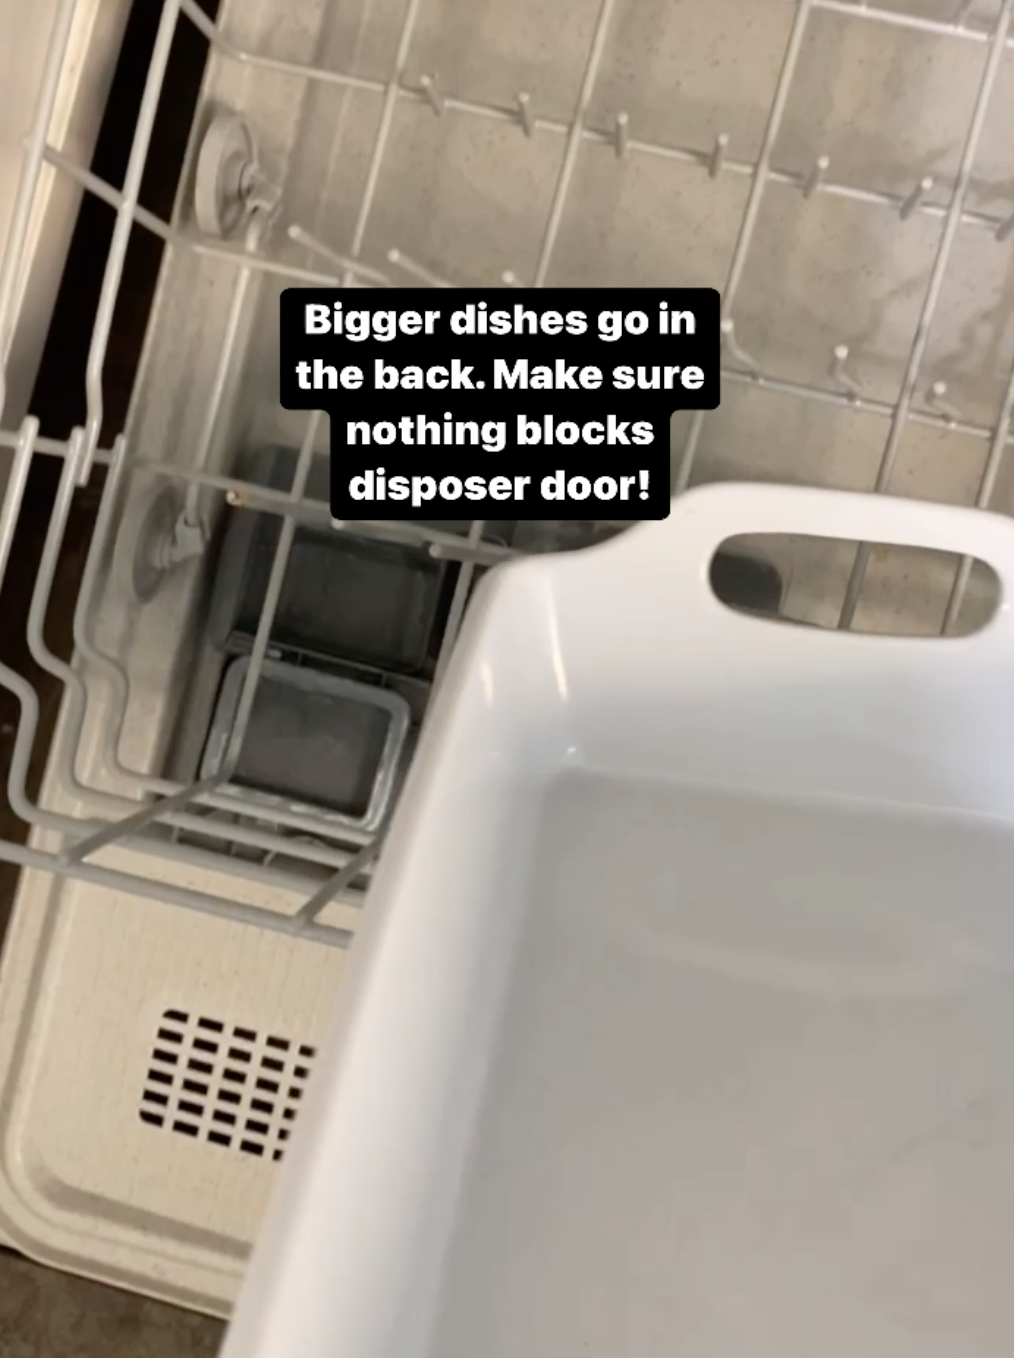 Bigger dishes go in the back; make sure nothing blocks the dispenser door!